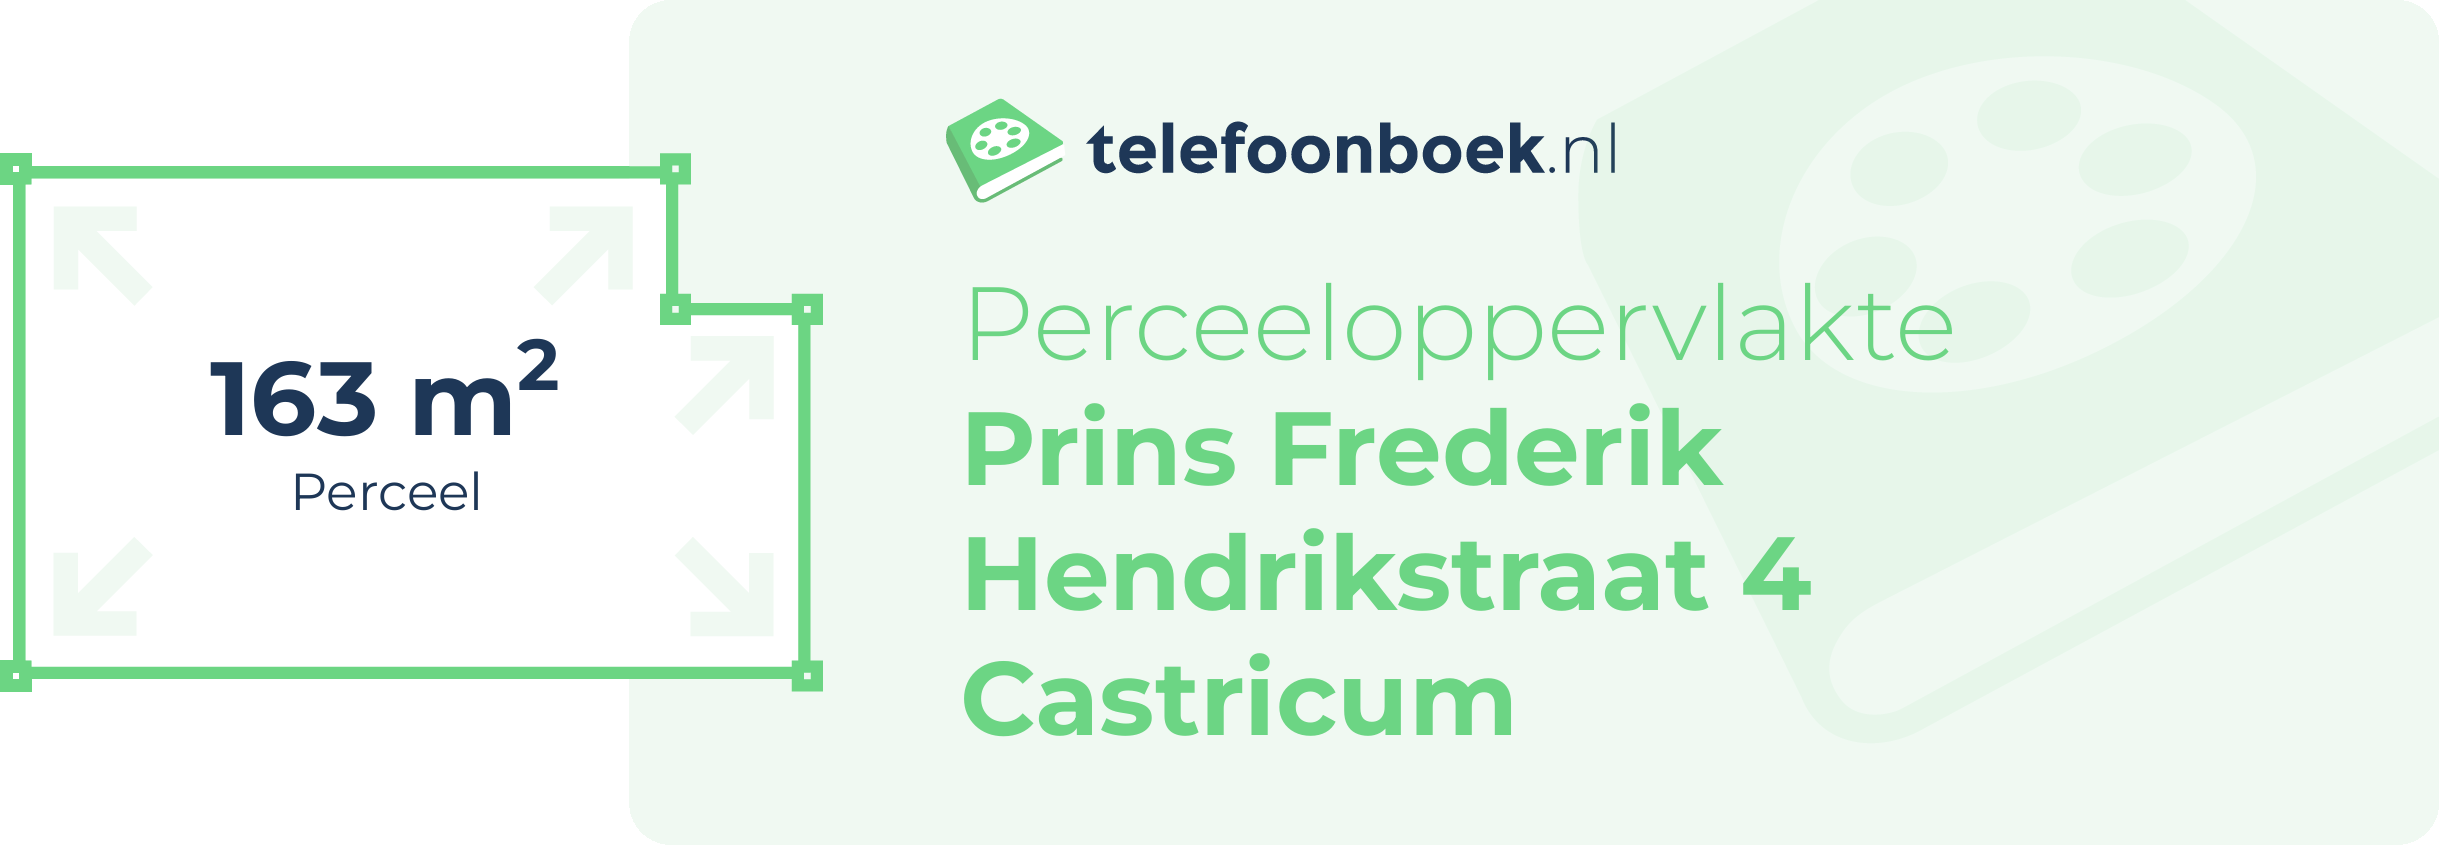 Perceeloppervlakte Prins Frederik Hendrikstraat 4 Castricum